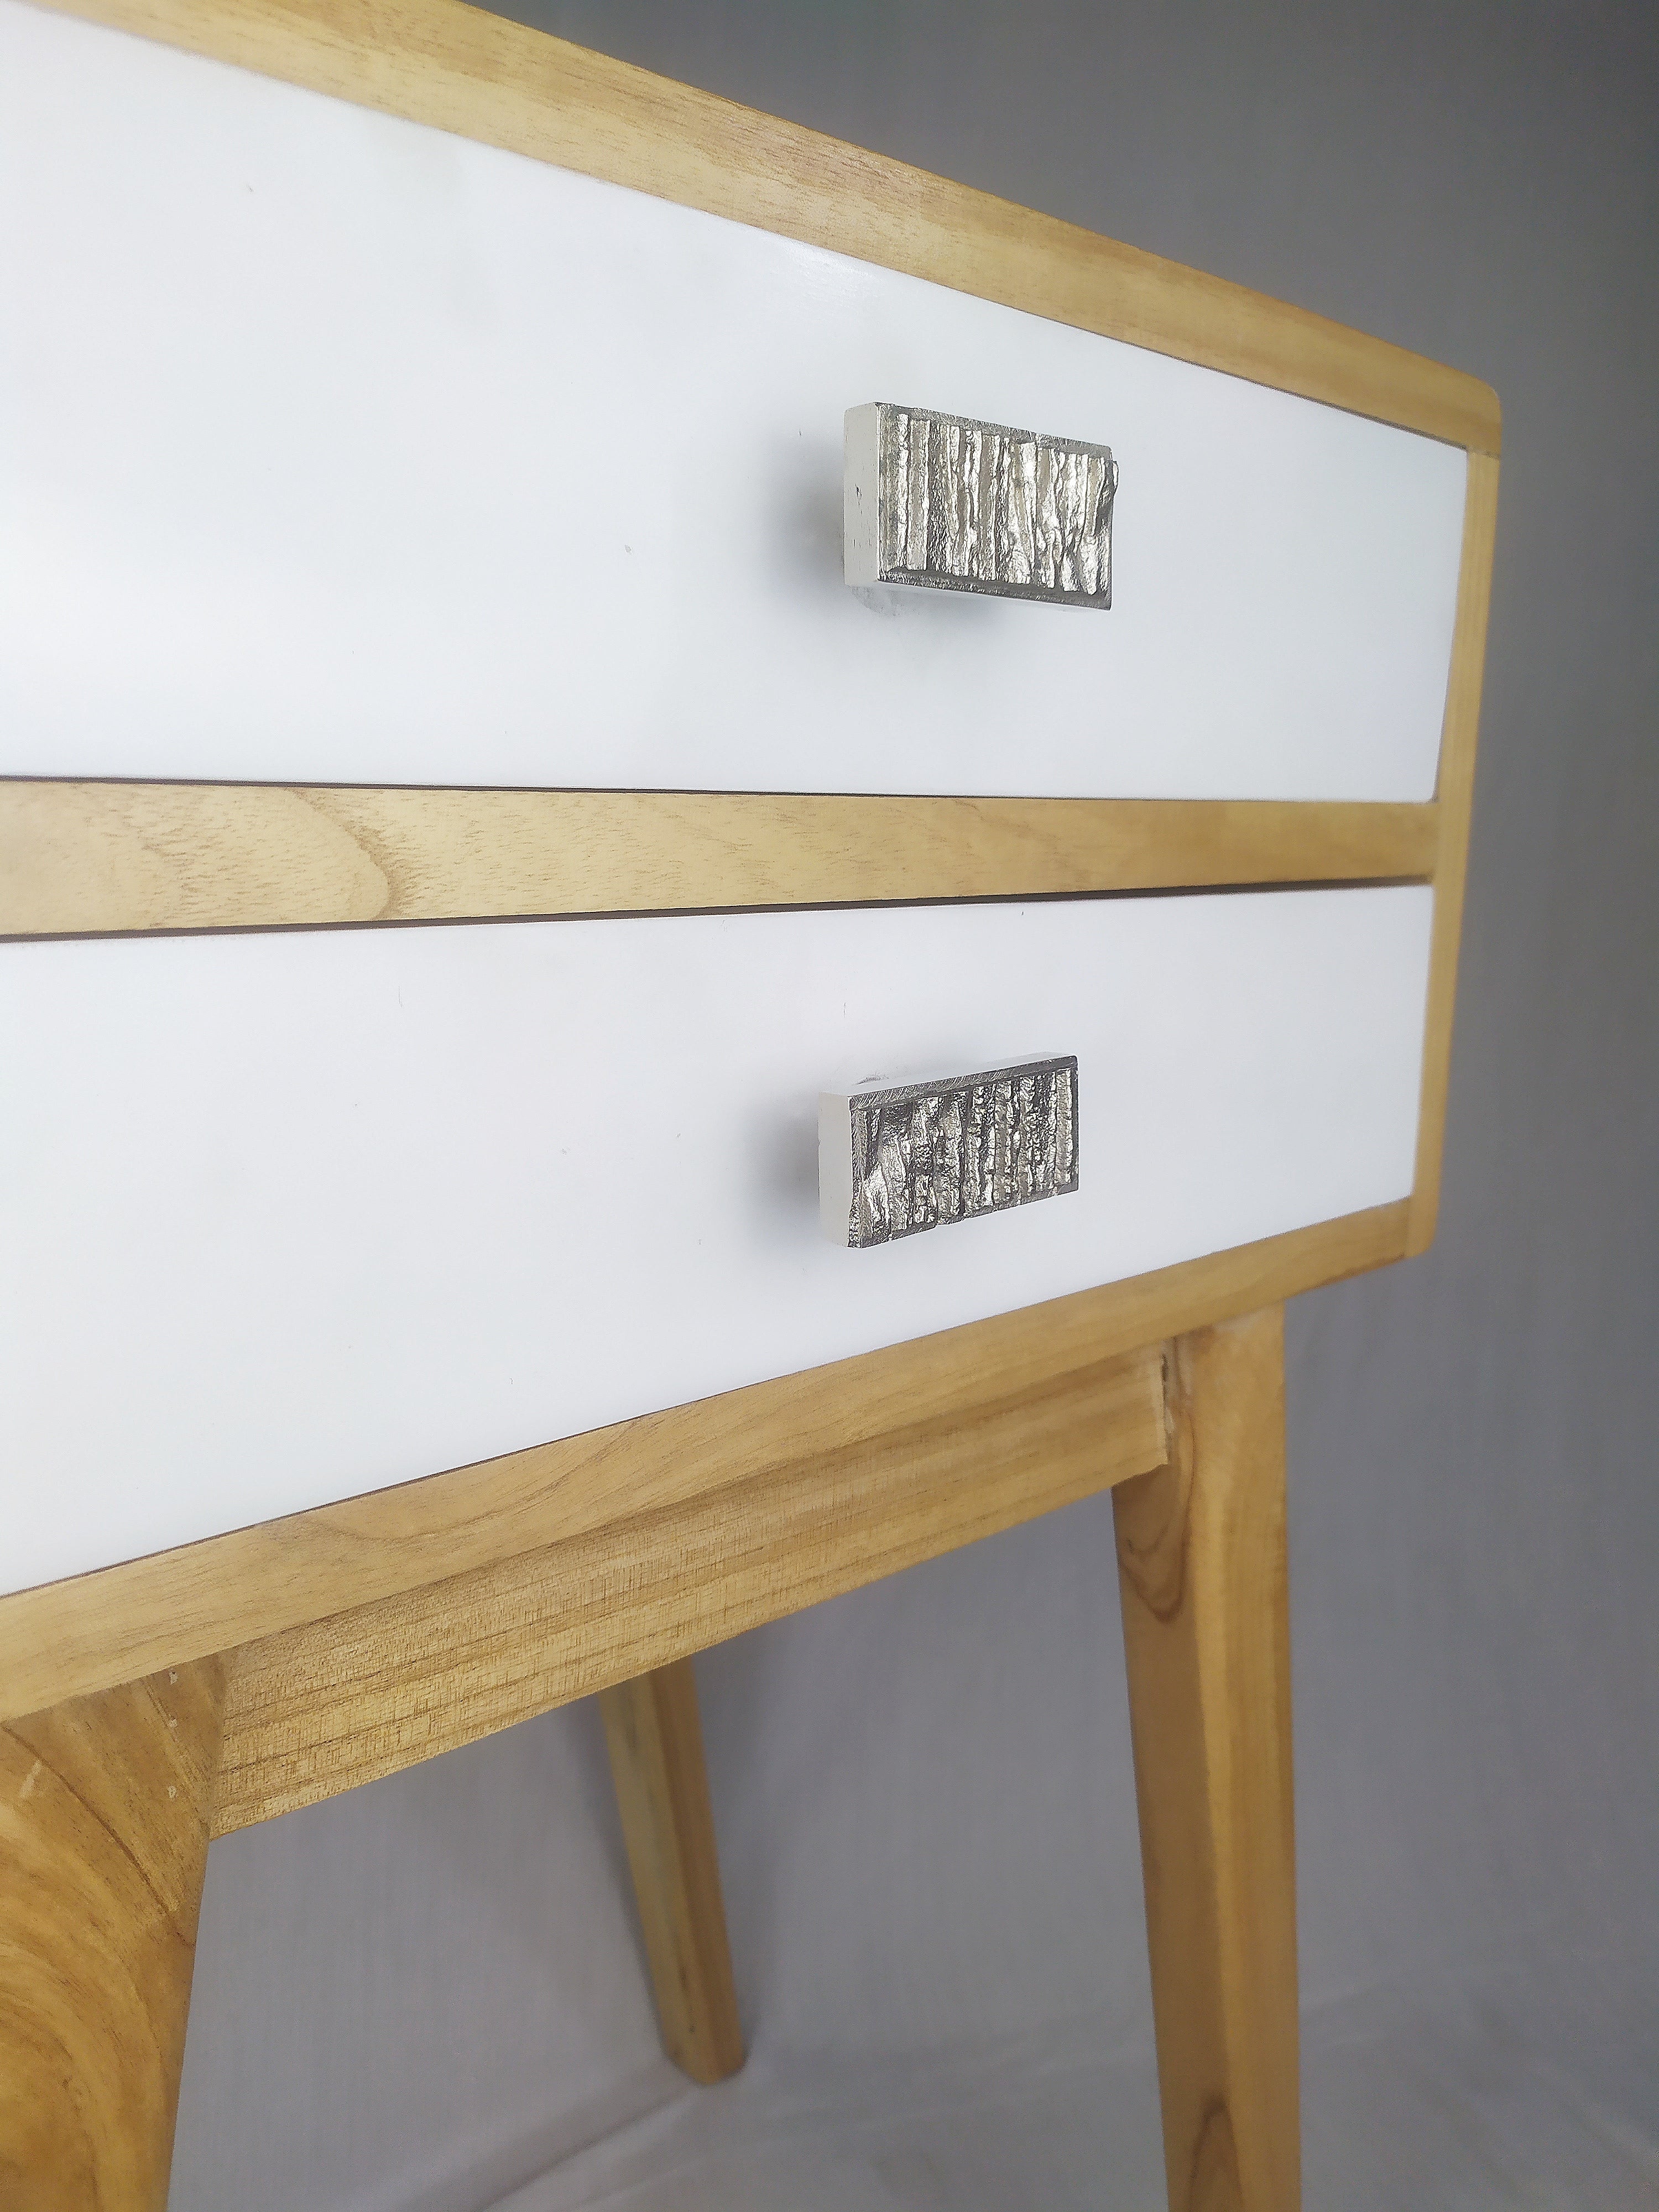 Wood Burn Short Bar Knob - Textured Metal Cabinet Knob